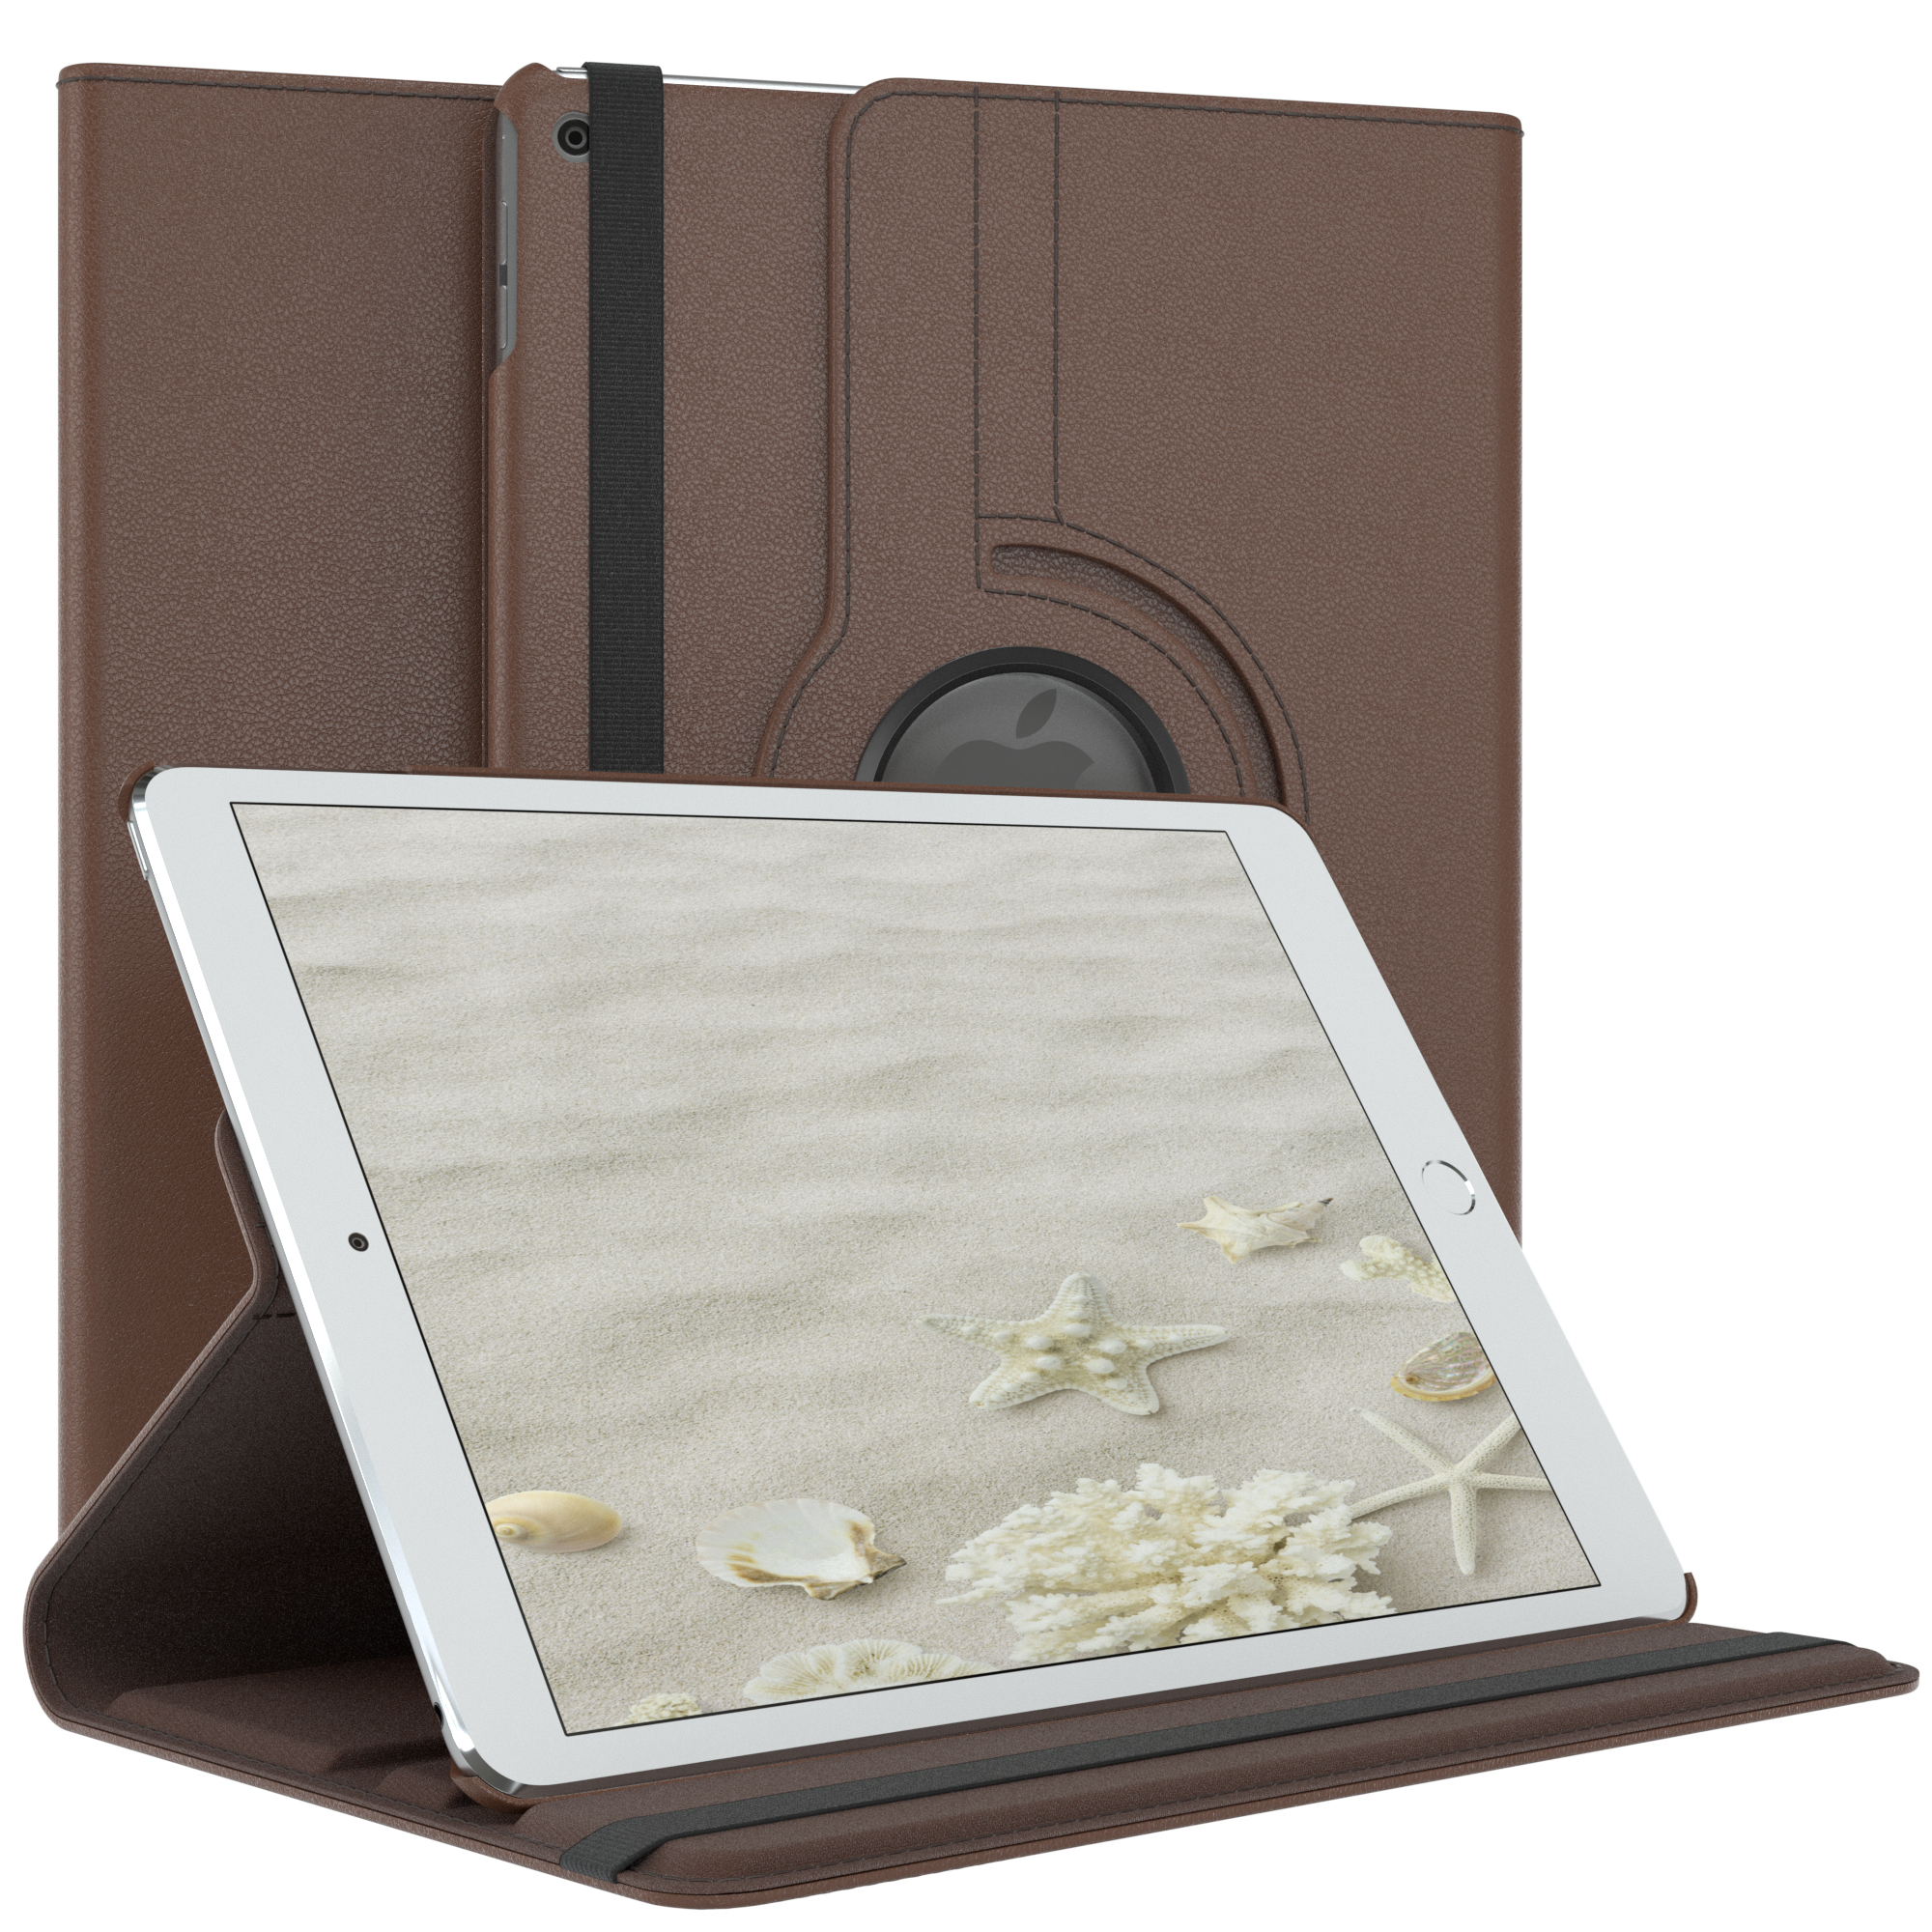 EAZY CASE Schutzhülle Rotationcase Apple Bookcover iPad Air für & / Gen.) (6/5 Gen) (1. 9.7\